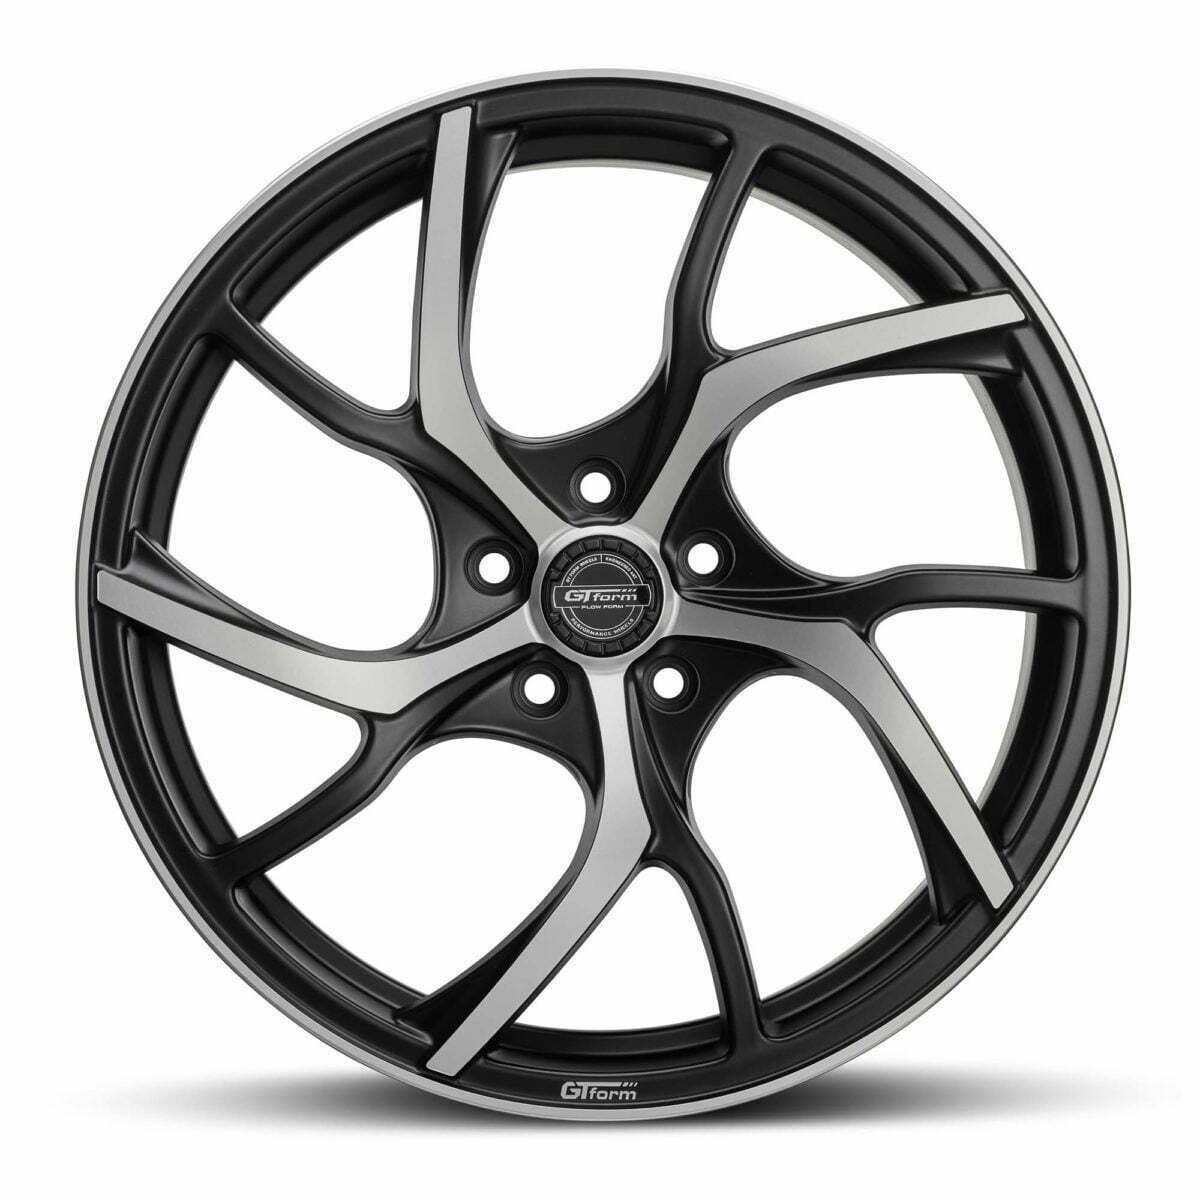 GT form Revert Satin Black Machined Face wheel rim performance wheels